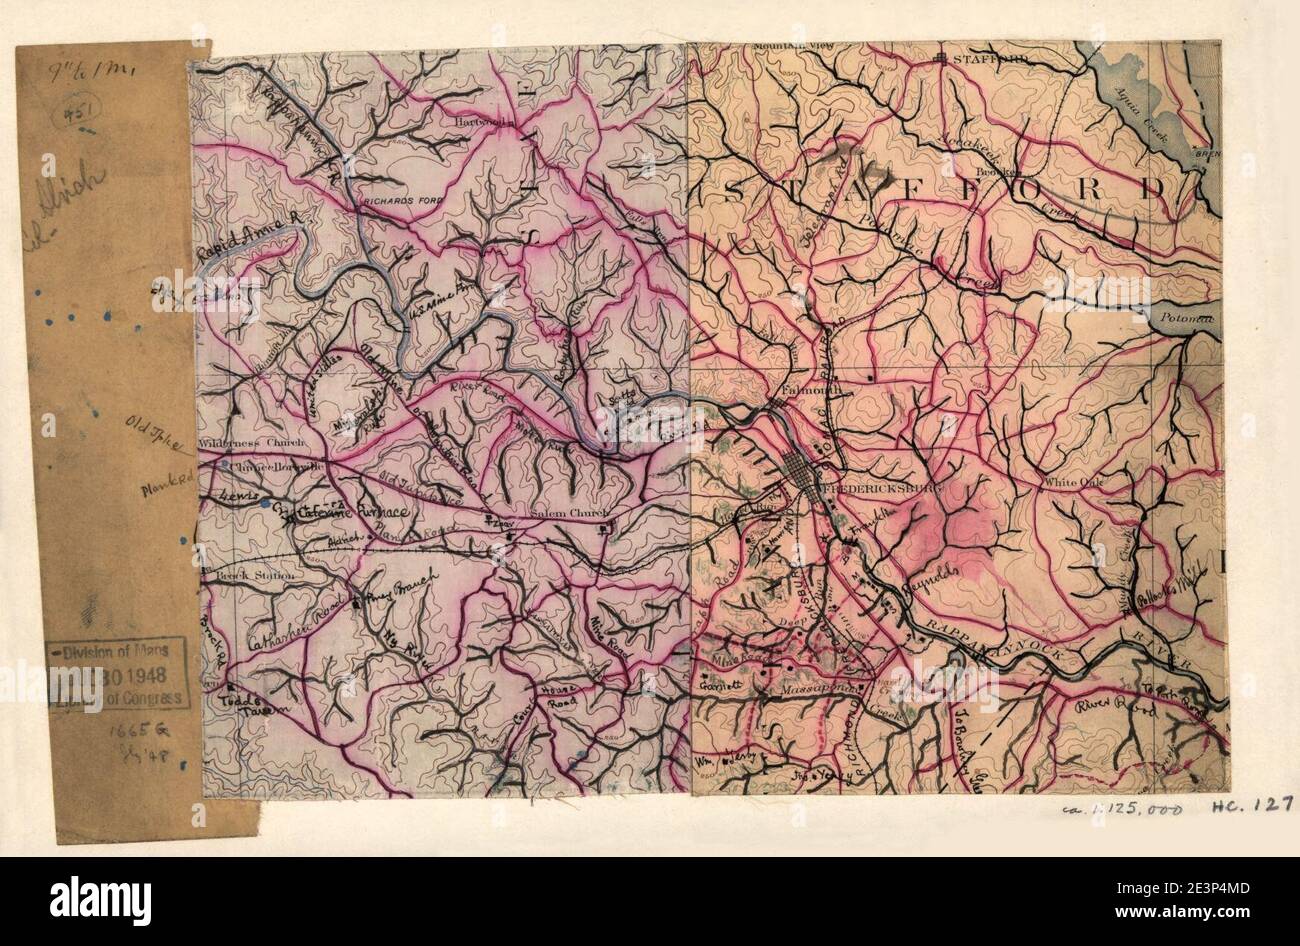 Map Of The Vicinity Of Fredericksburg Va 2E3P4MD 